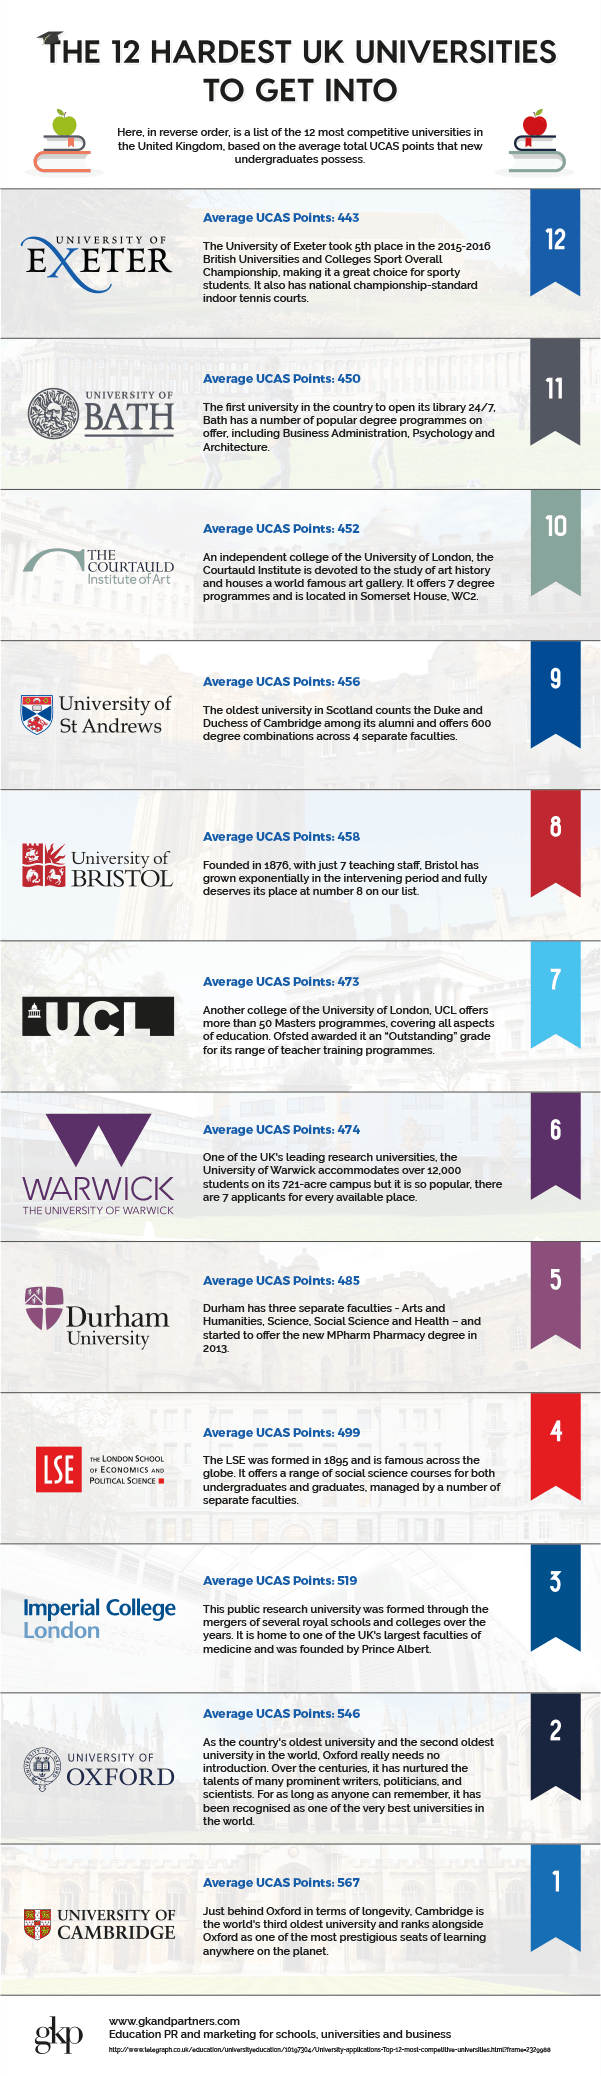 The 12 Hardest UK Universities to Get Into